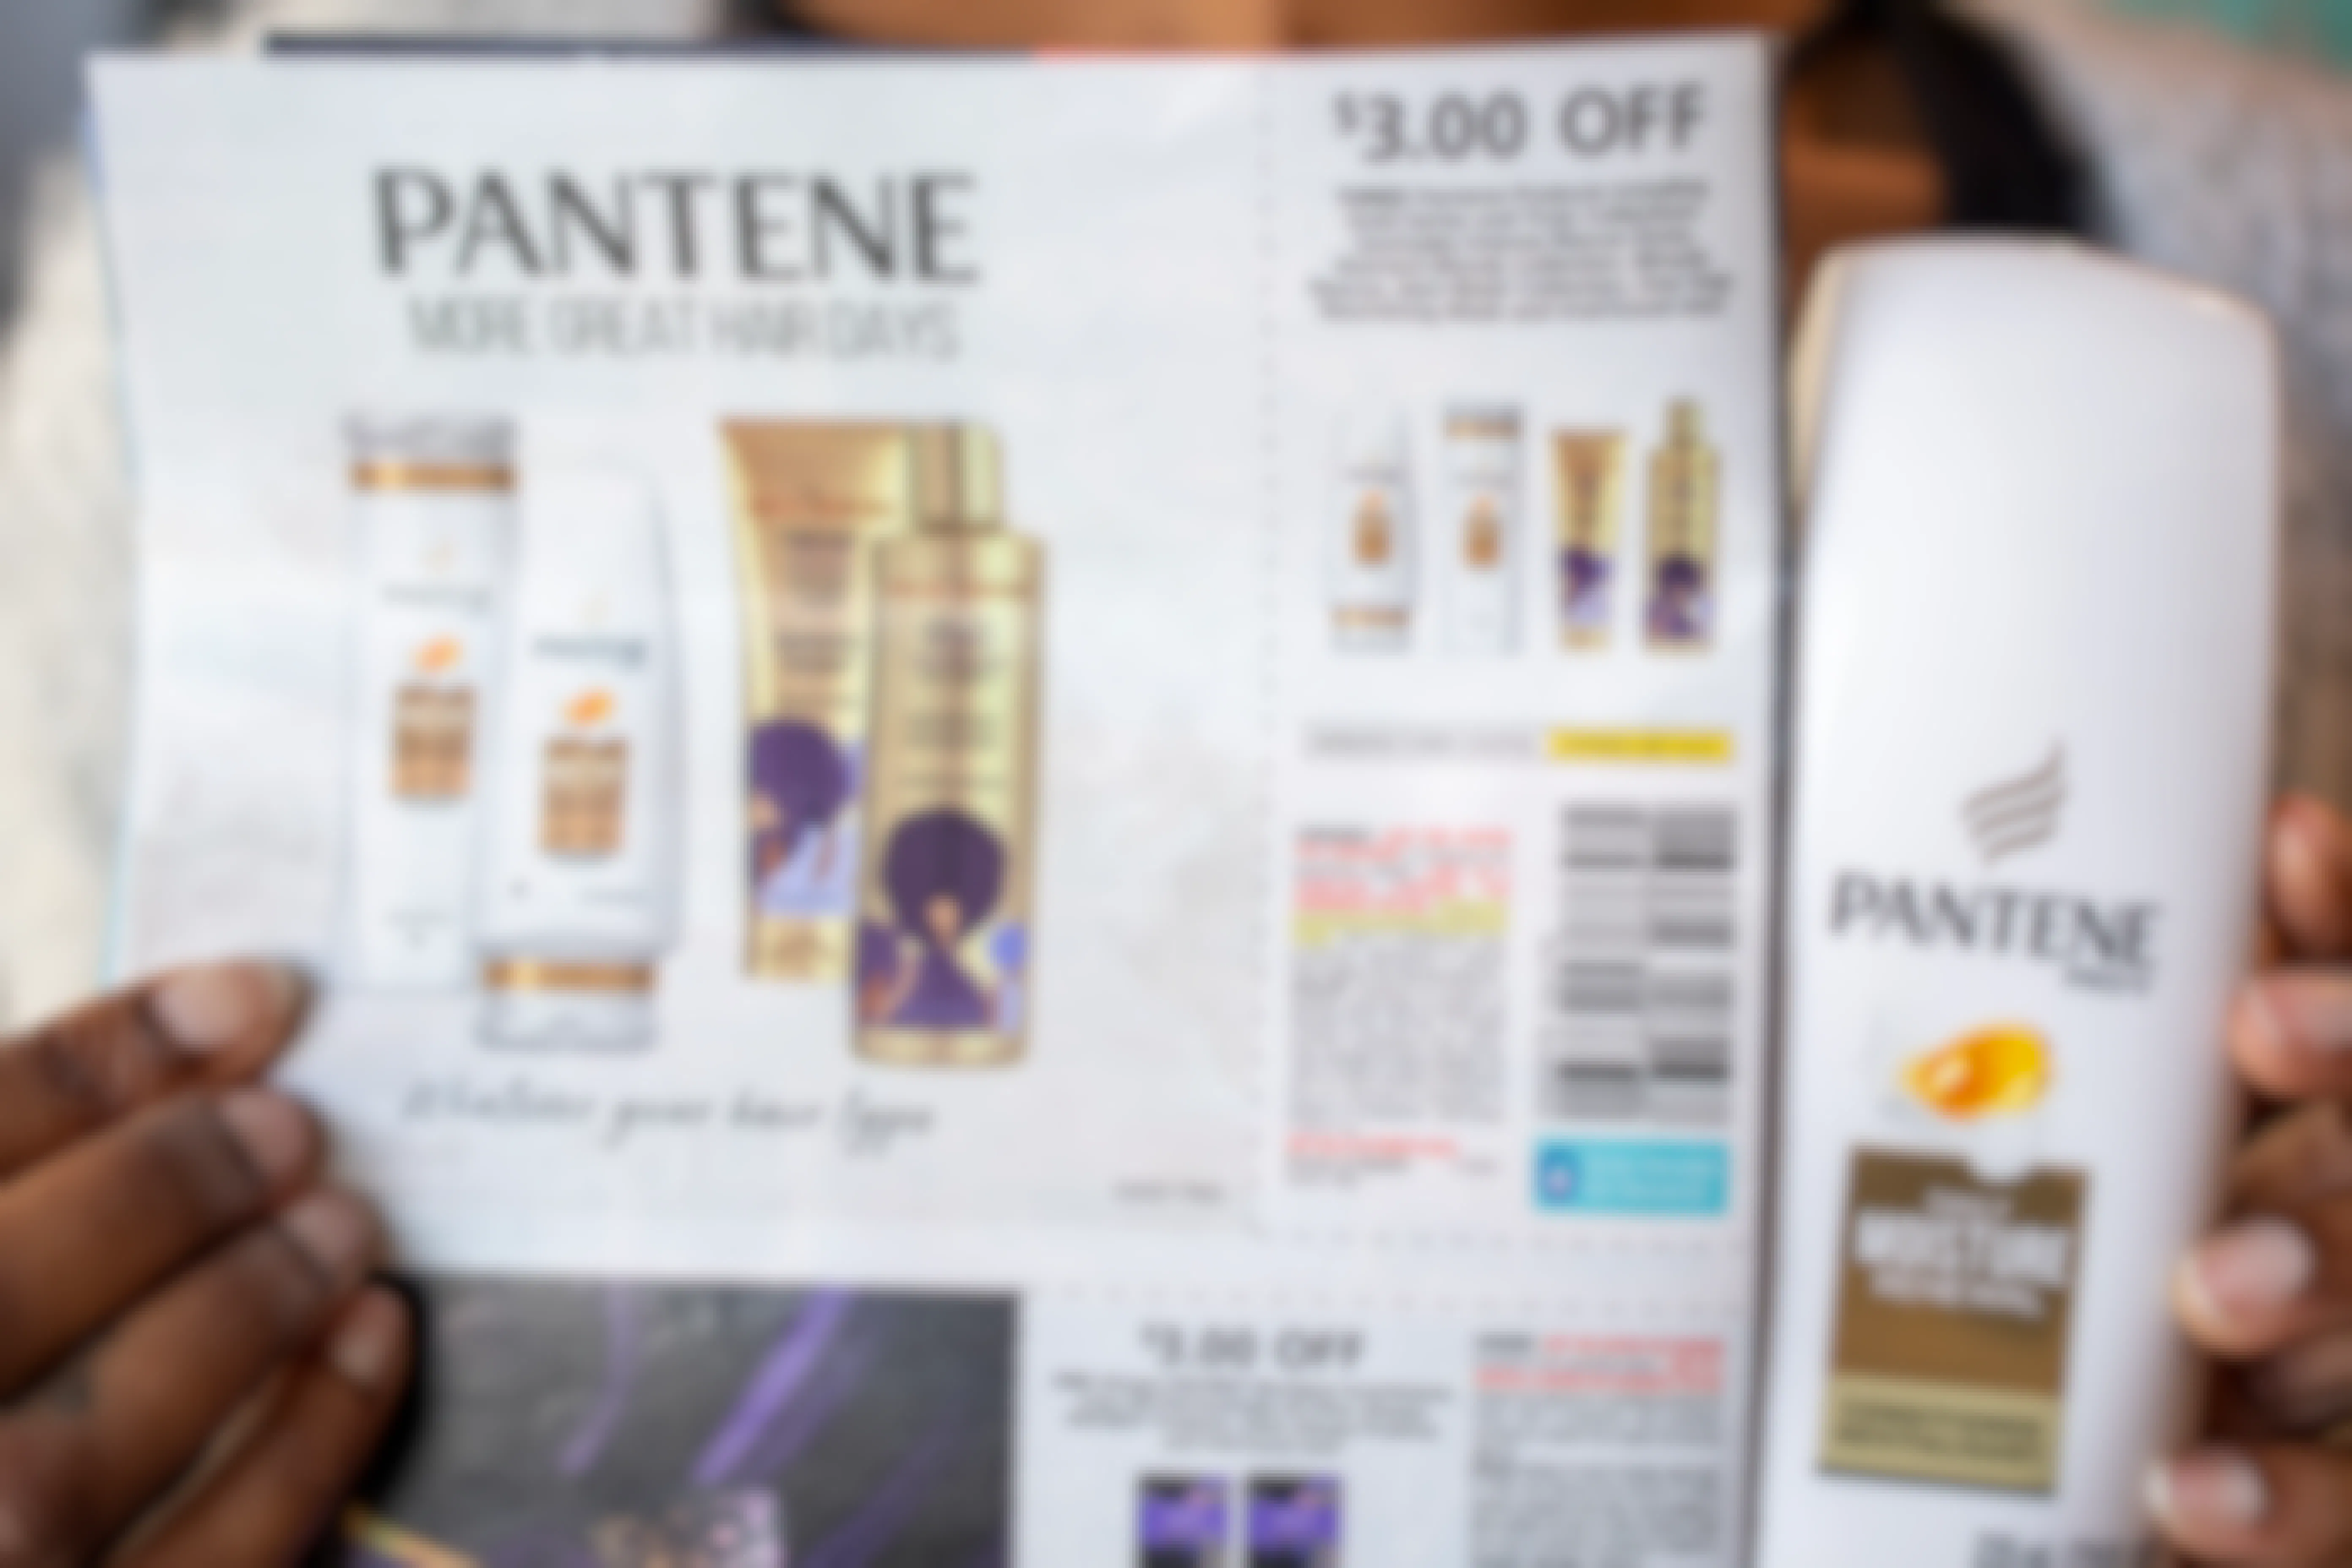 A Pantene bottle next to a Pantene manufacture coupon